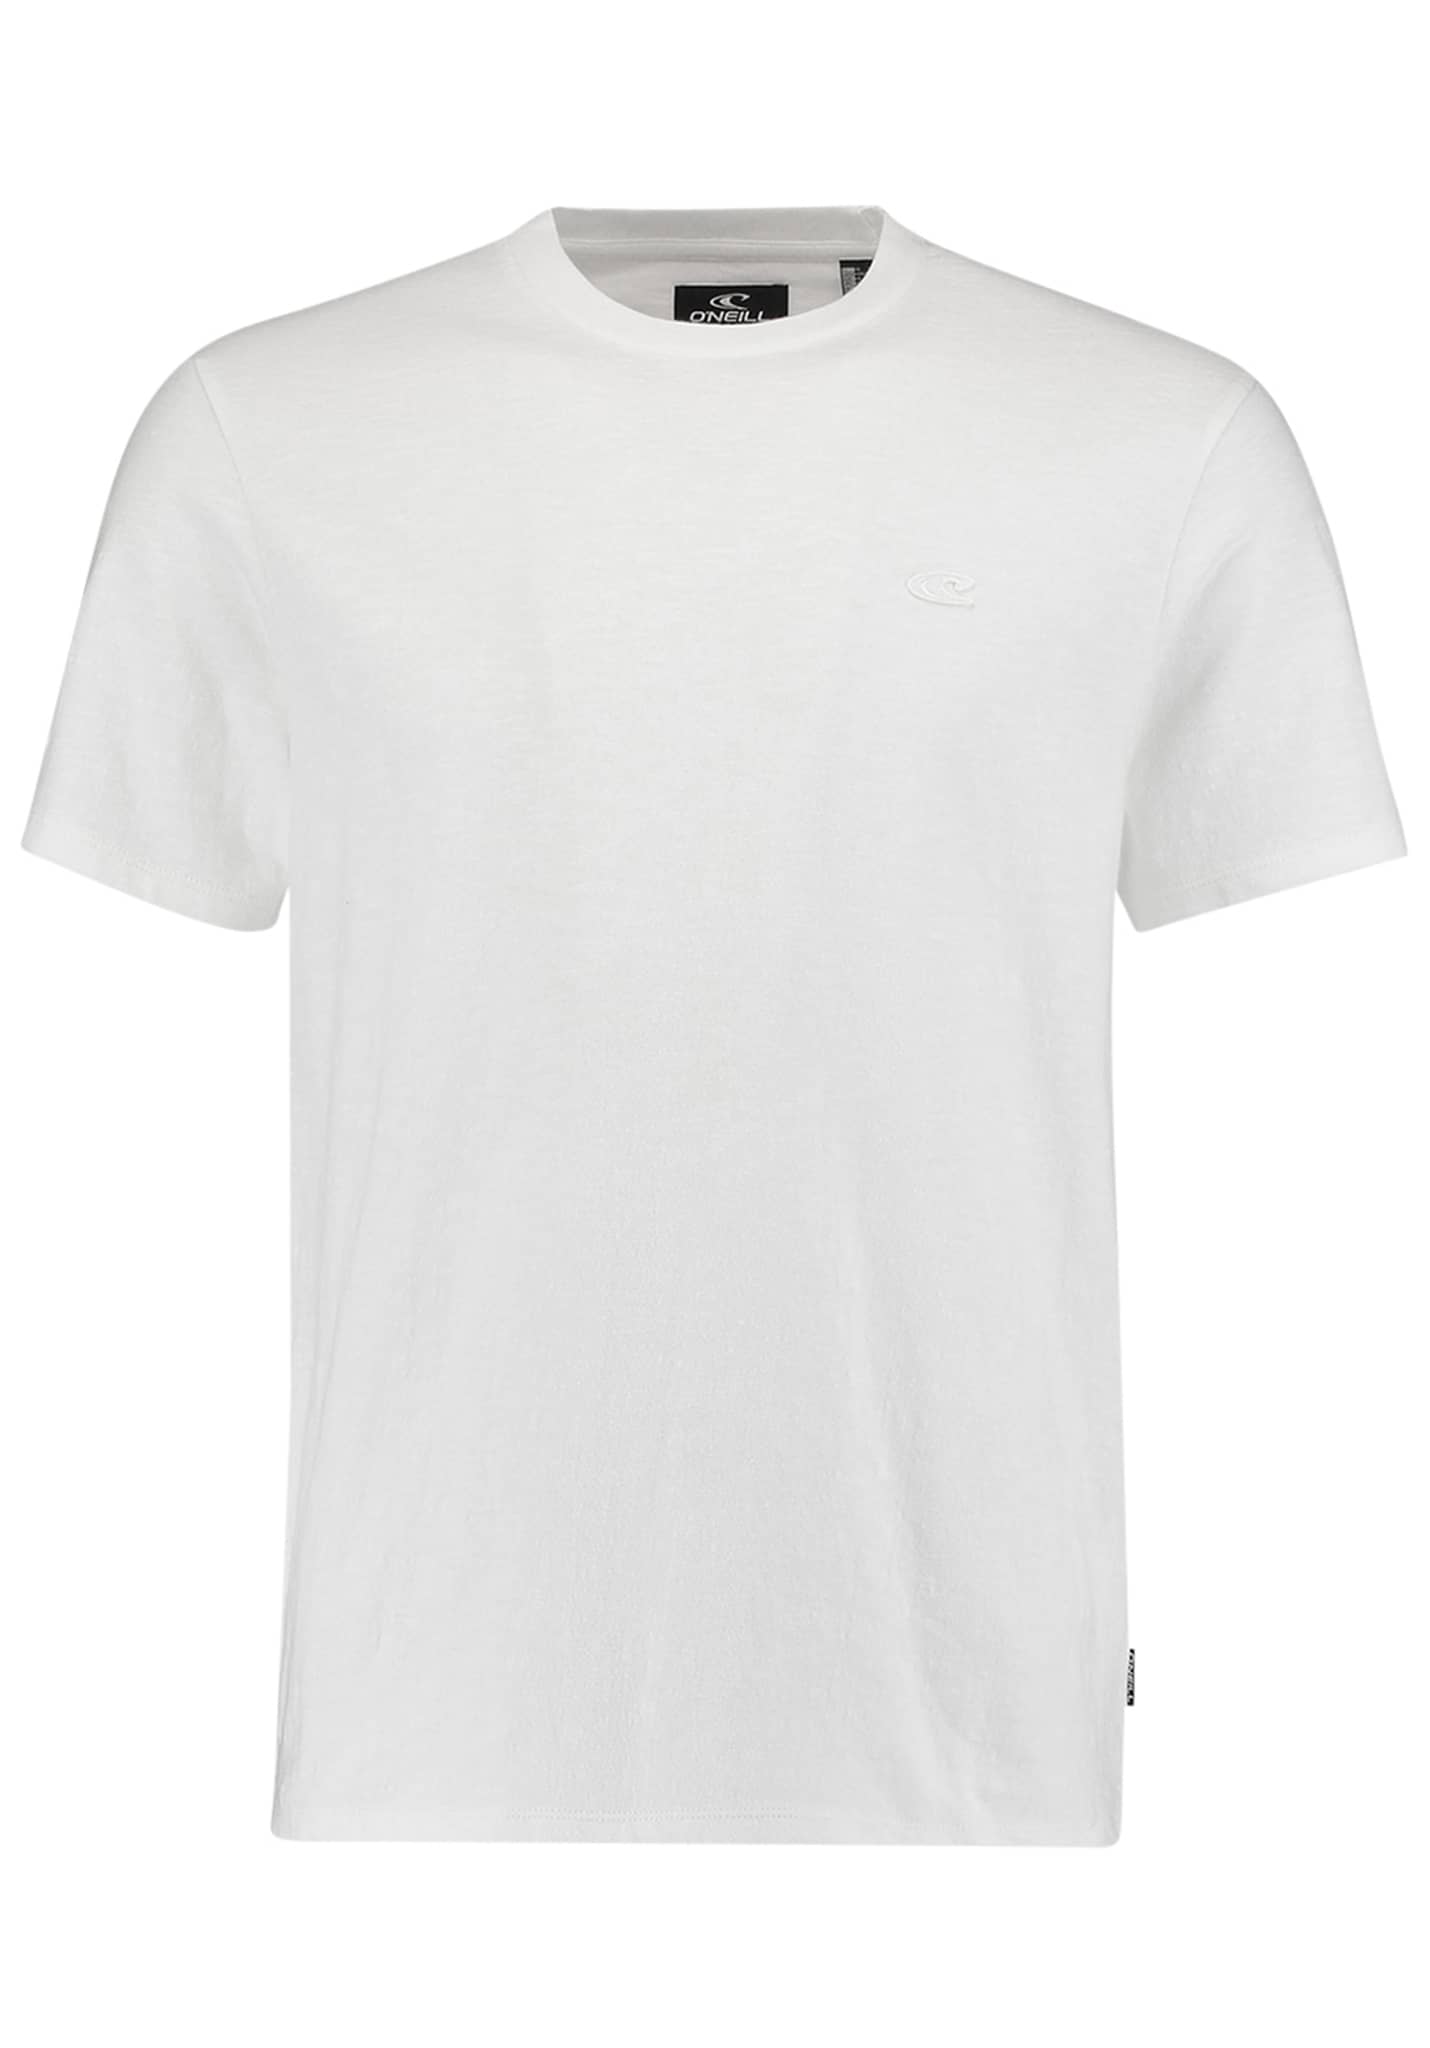 O'Neill Oldschool T-Shirt white L